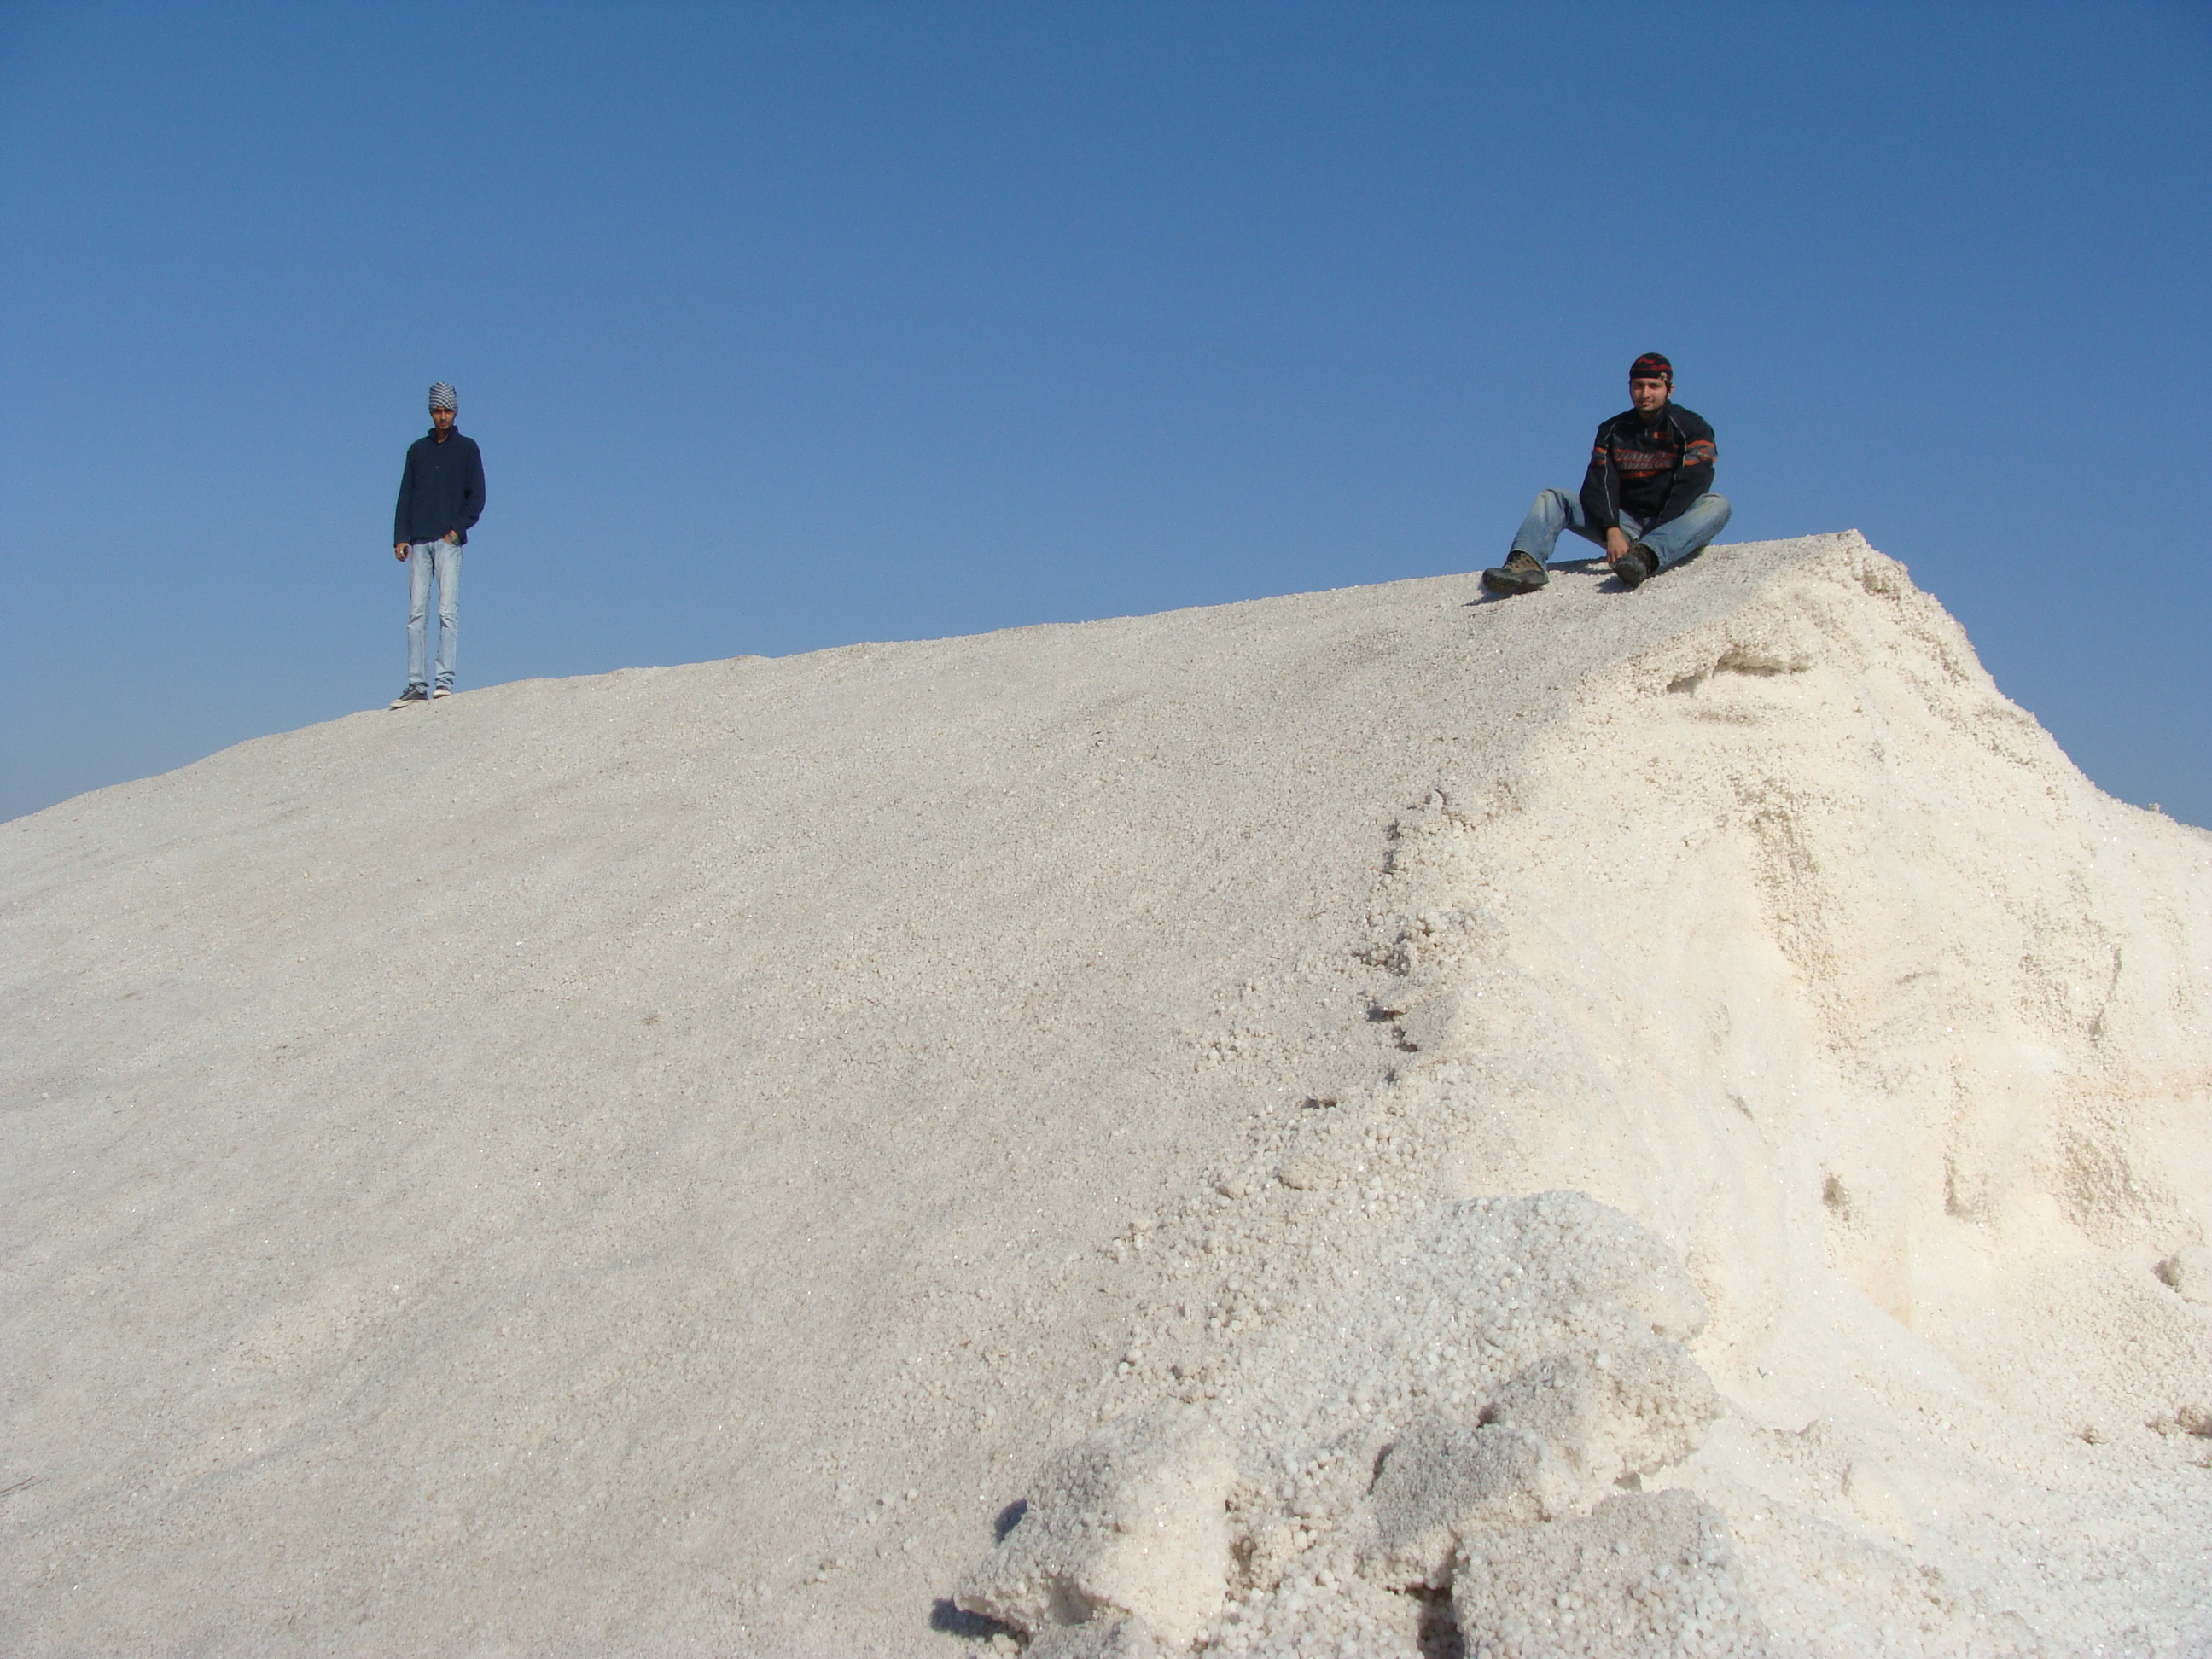 atop a salt mountain @ Rann of
Kutch